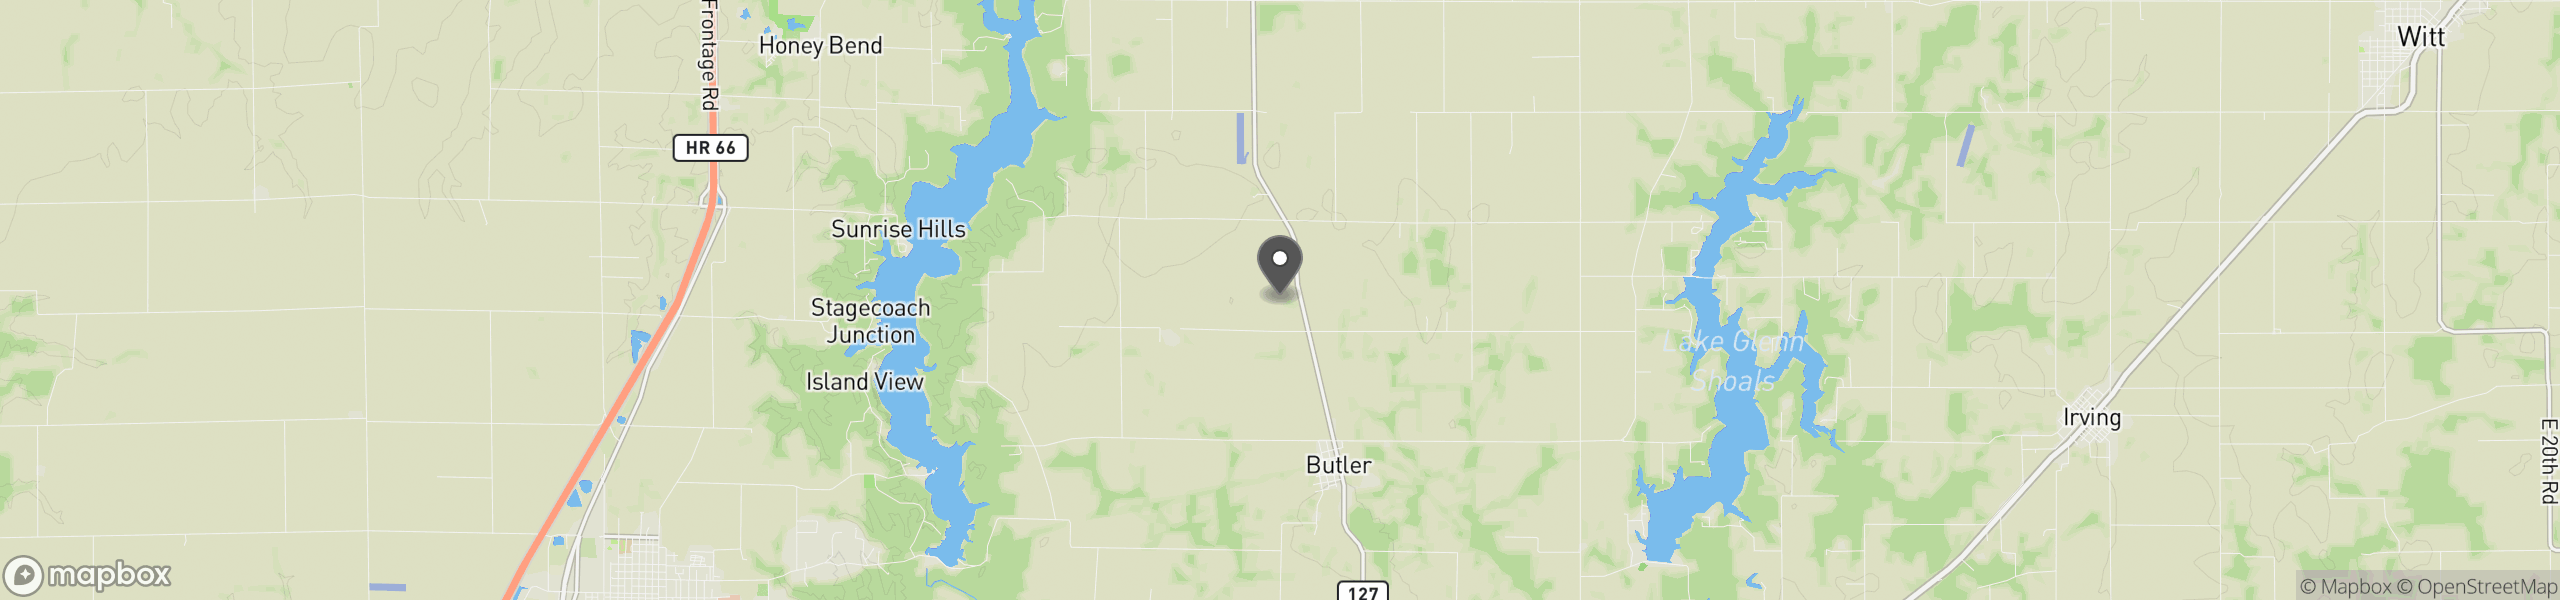 Butler, IL 62015